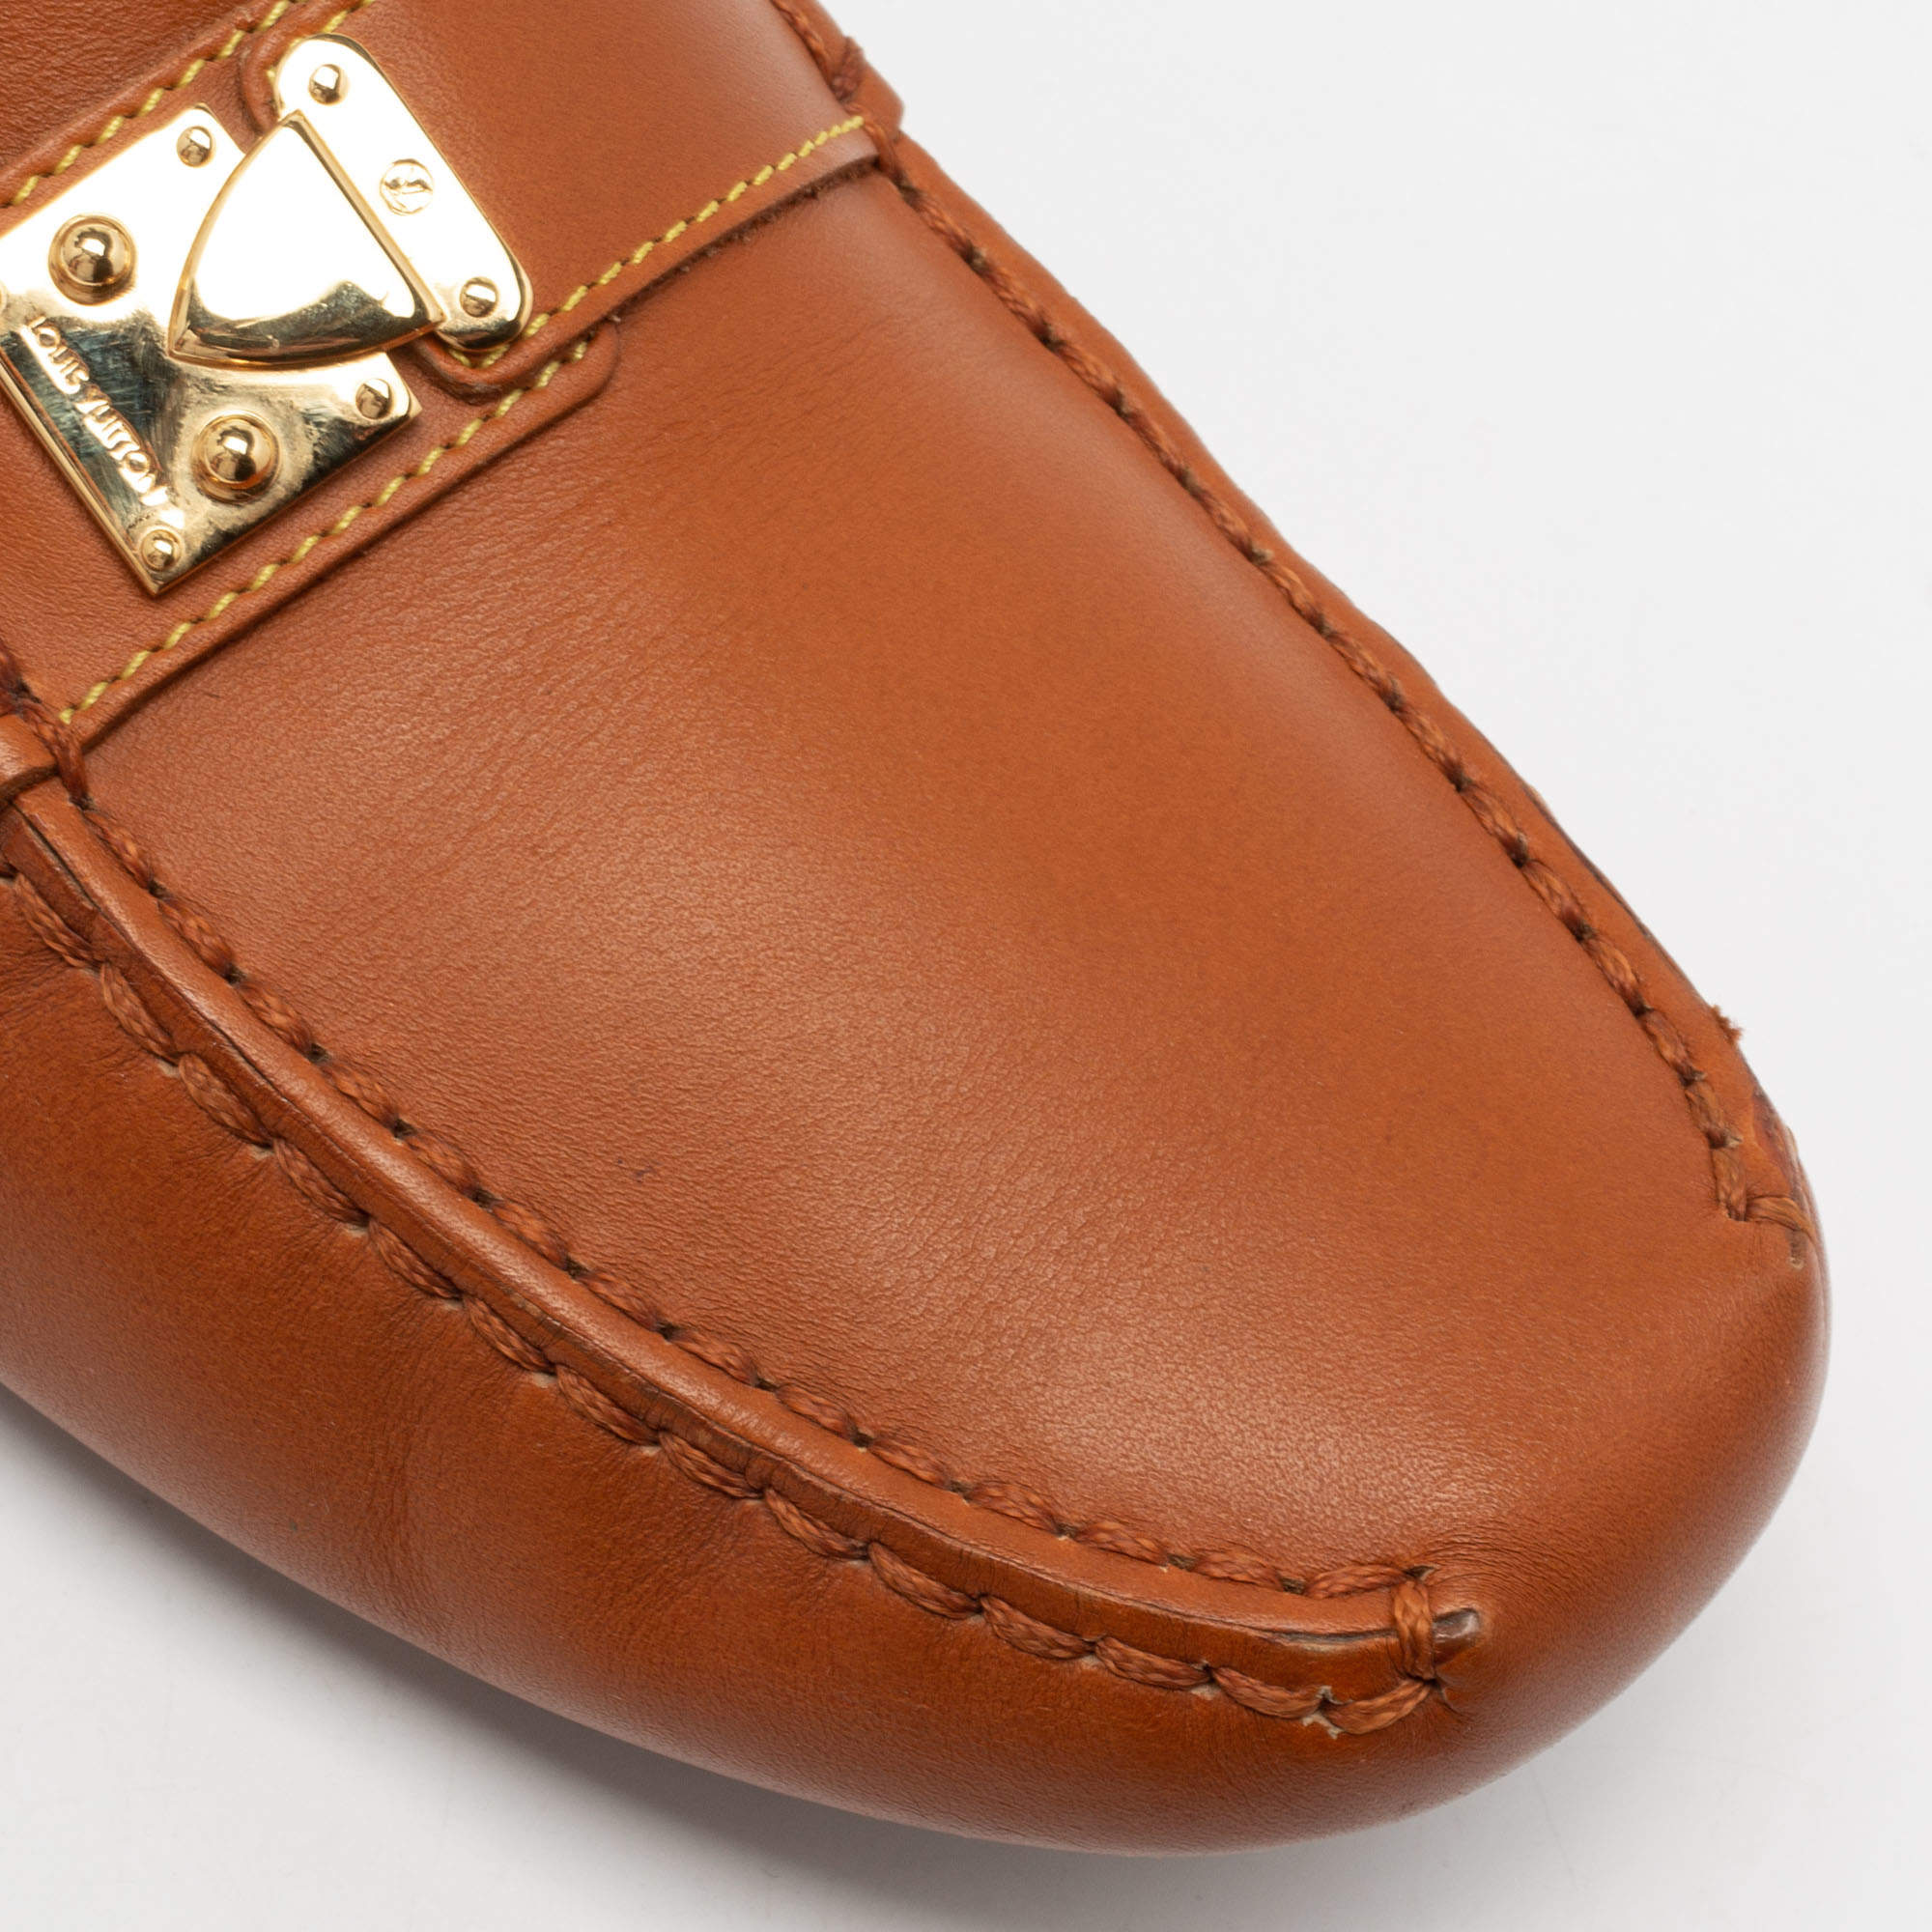 Louis Vuitton Tan Leather S Lock Slip On Loafers Size 40.5 Louis Vuitton